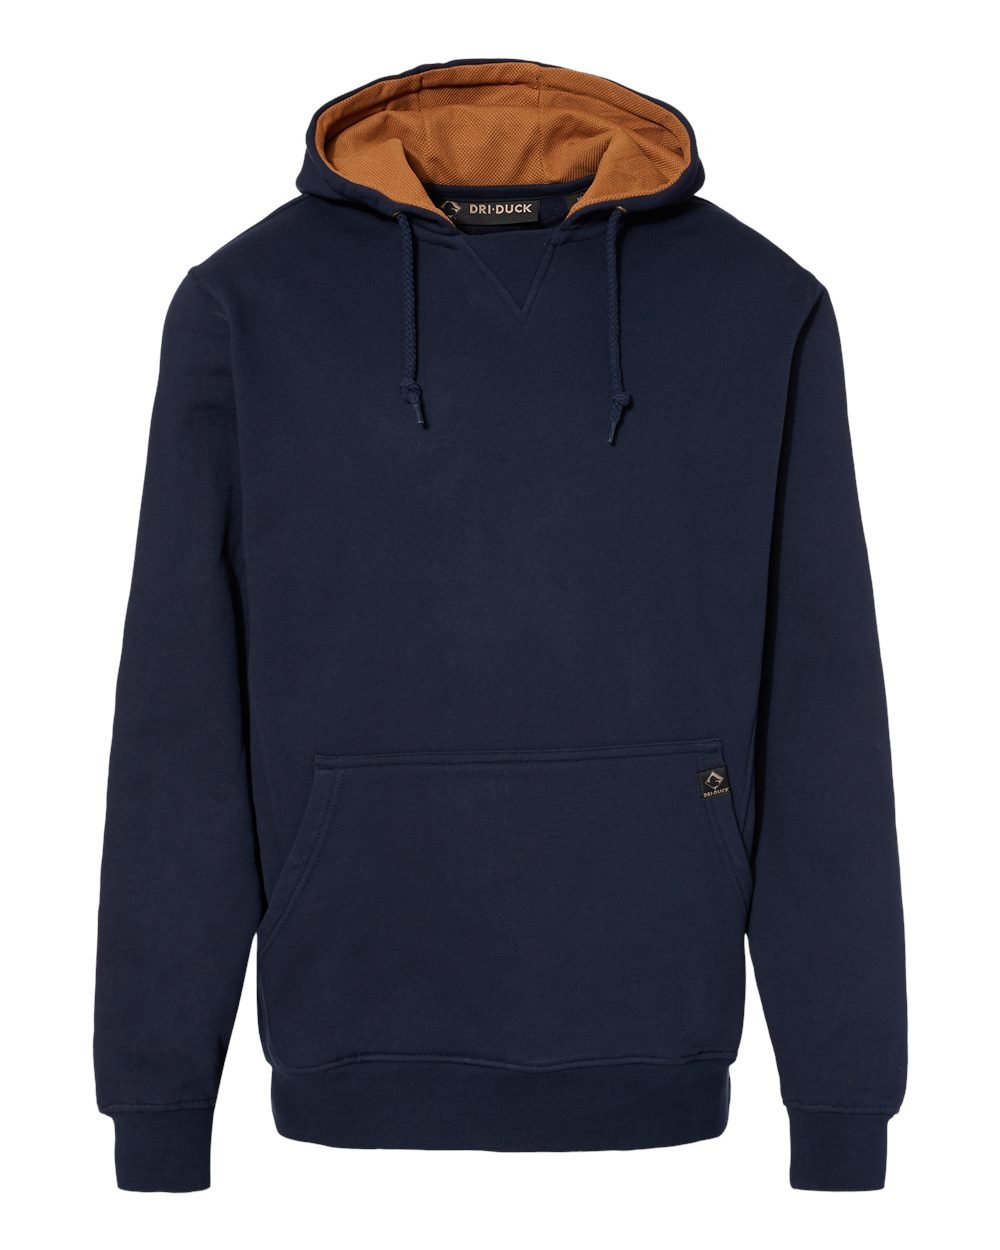 Dri Duck 7035 Cotton Blend Pullover Hooded Sweatshirt | JiffyShirts